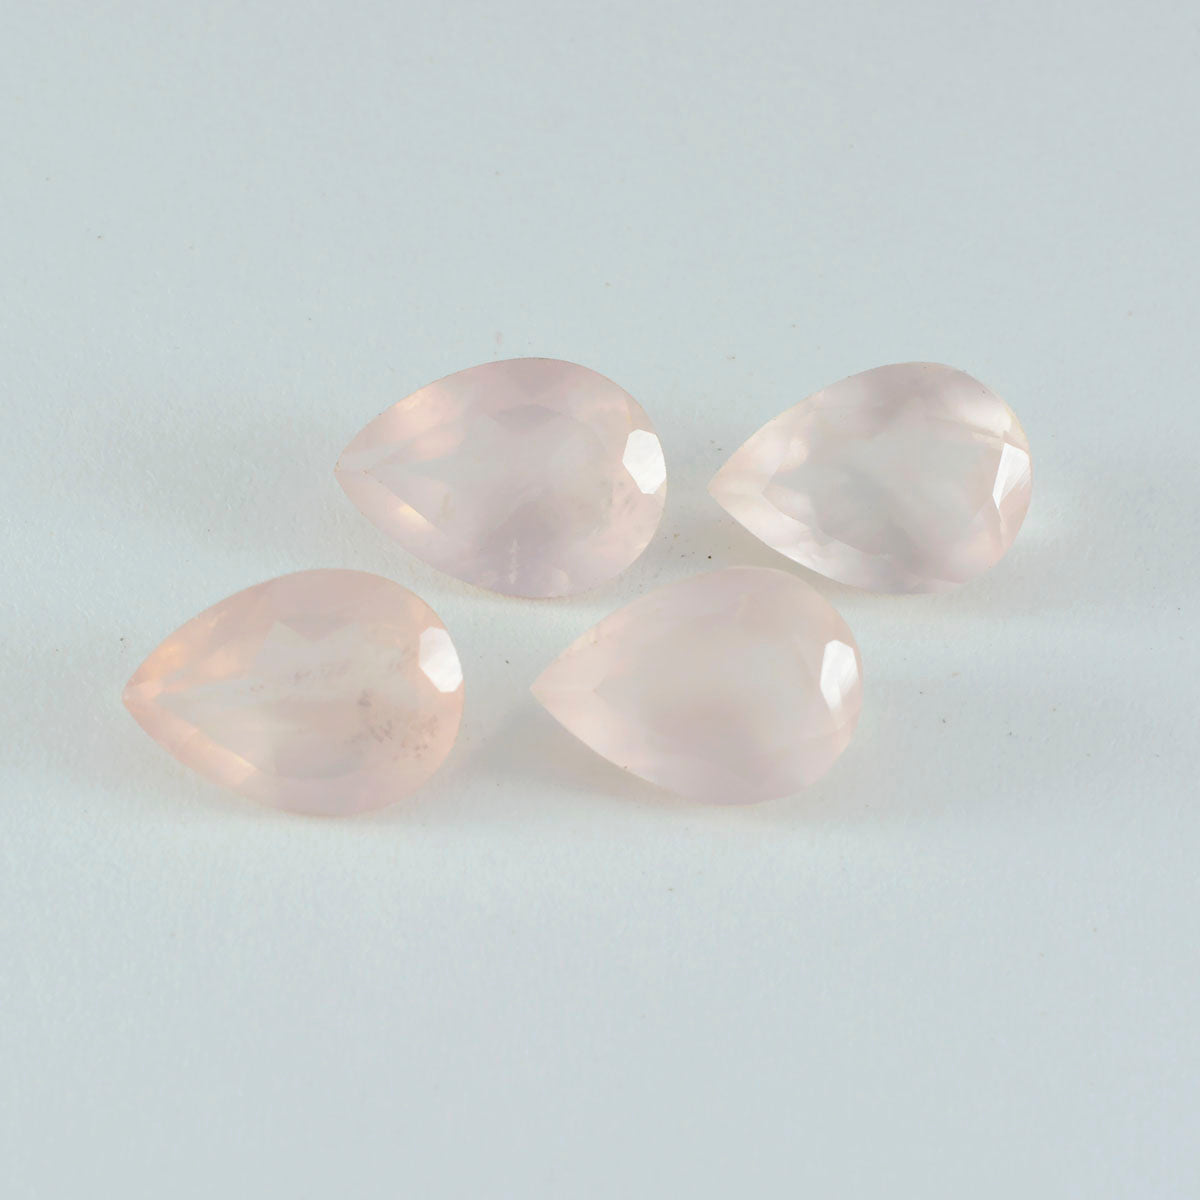 Riyogems 1PC Pink Rose Quartz Faceted 12x16 mm Pear Shape A Quality Loose Gemstone